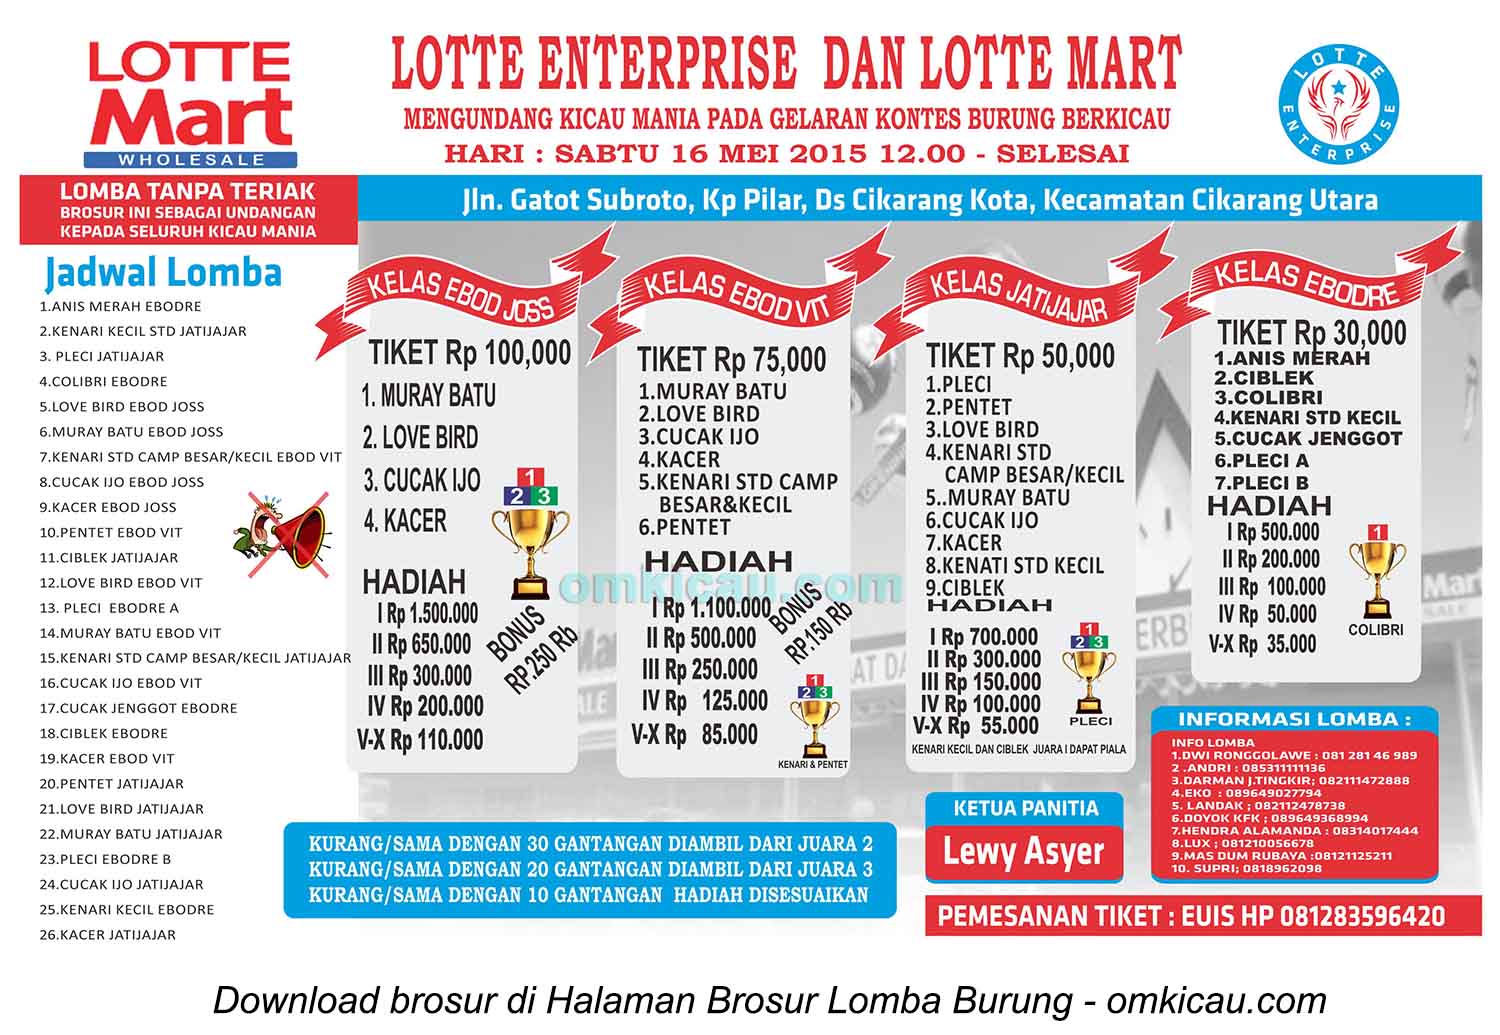 Brosur Latpres Lotte Enterprise, Cikarang, 16 Mei 2015